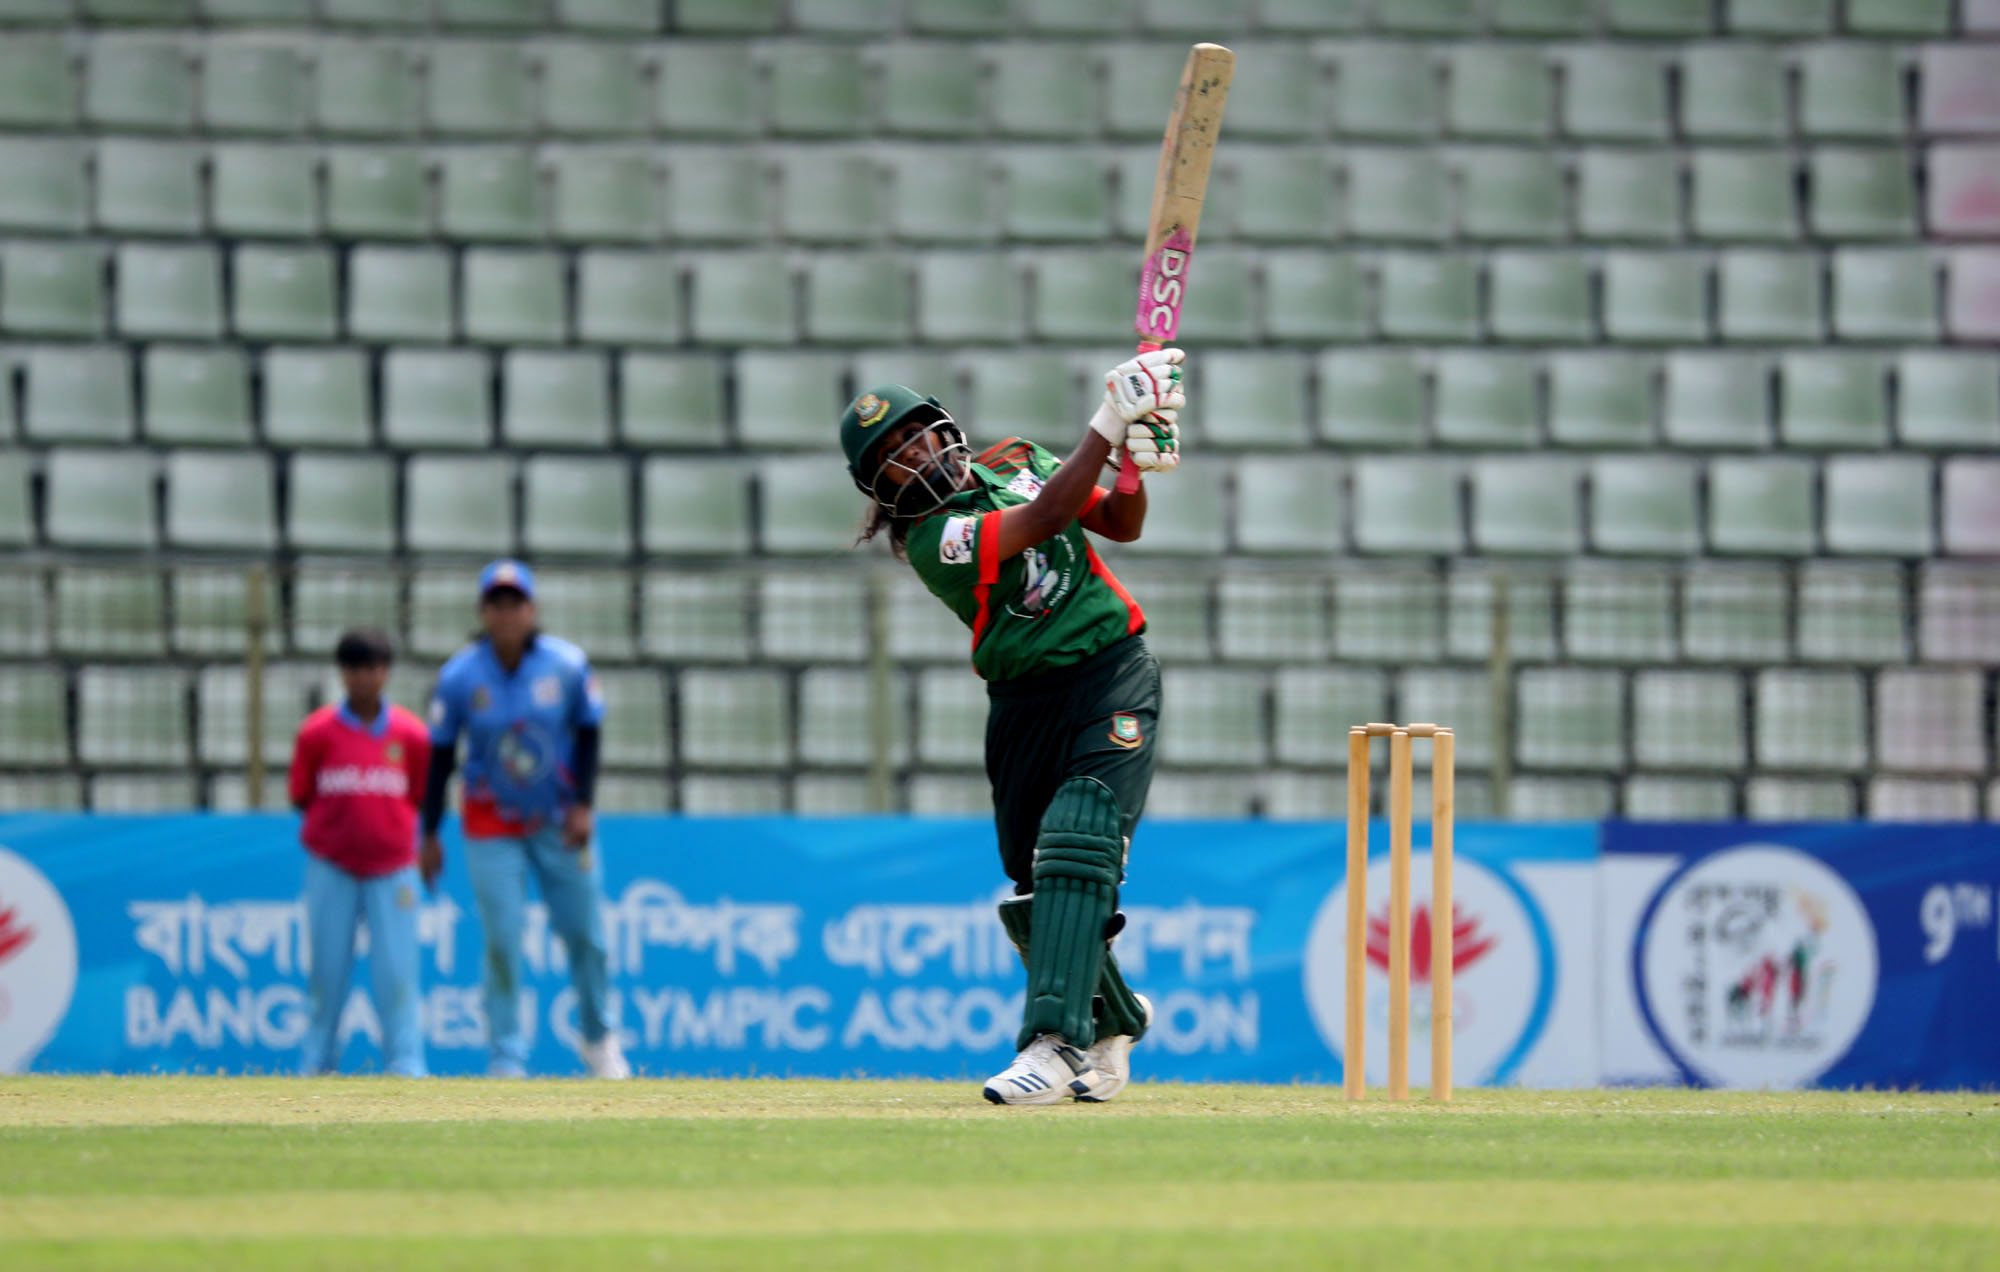 All-Round Ritu Moni guides Green Team to final in Bangabandhu 9th Bangladesh Games 2020 (Women’s Cricket Event)